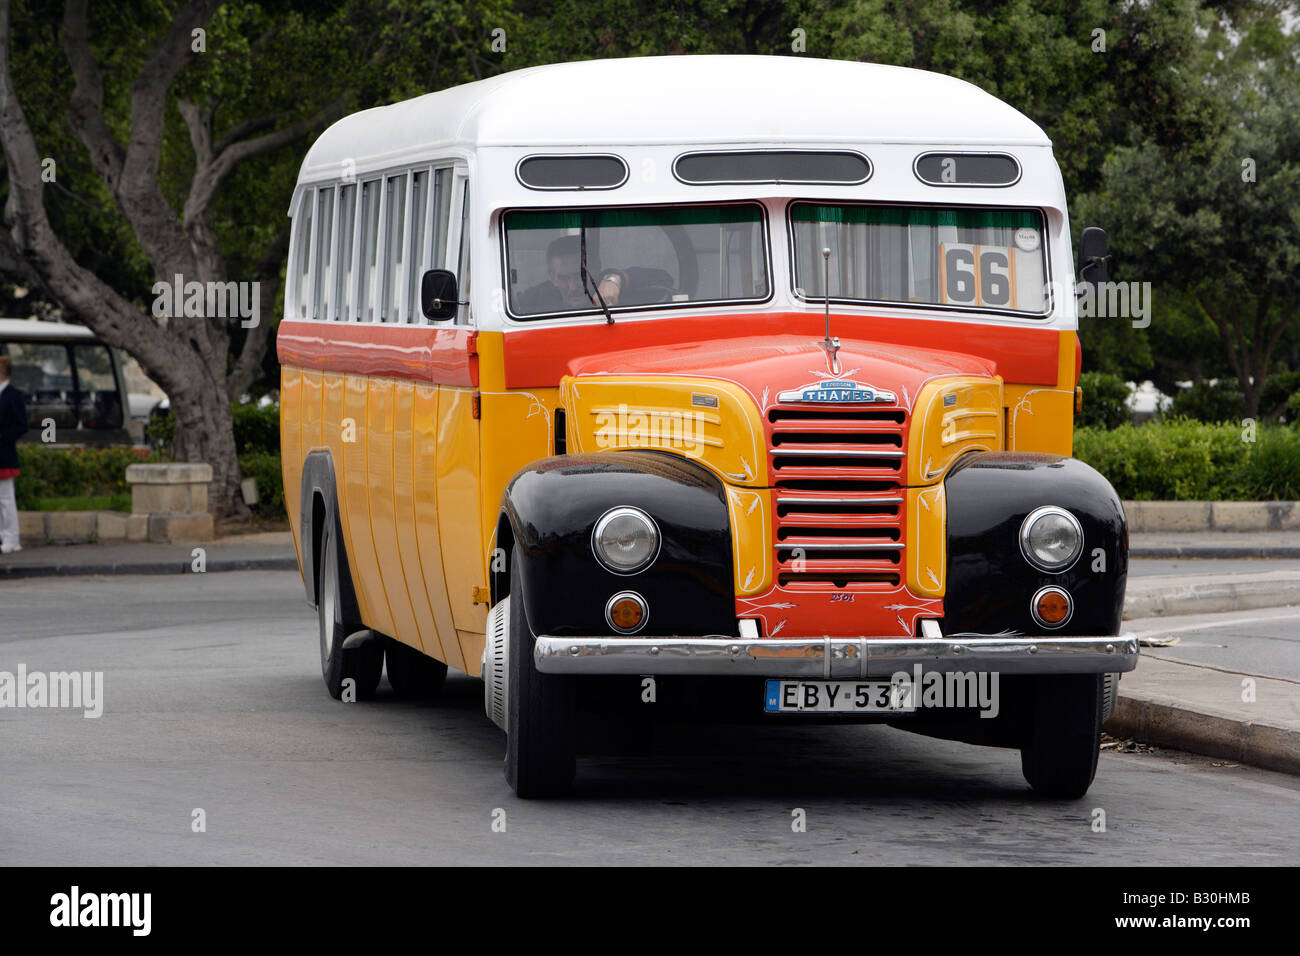 Classic Malta Bus Stock Photo